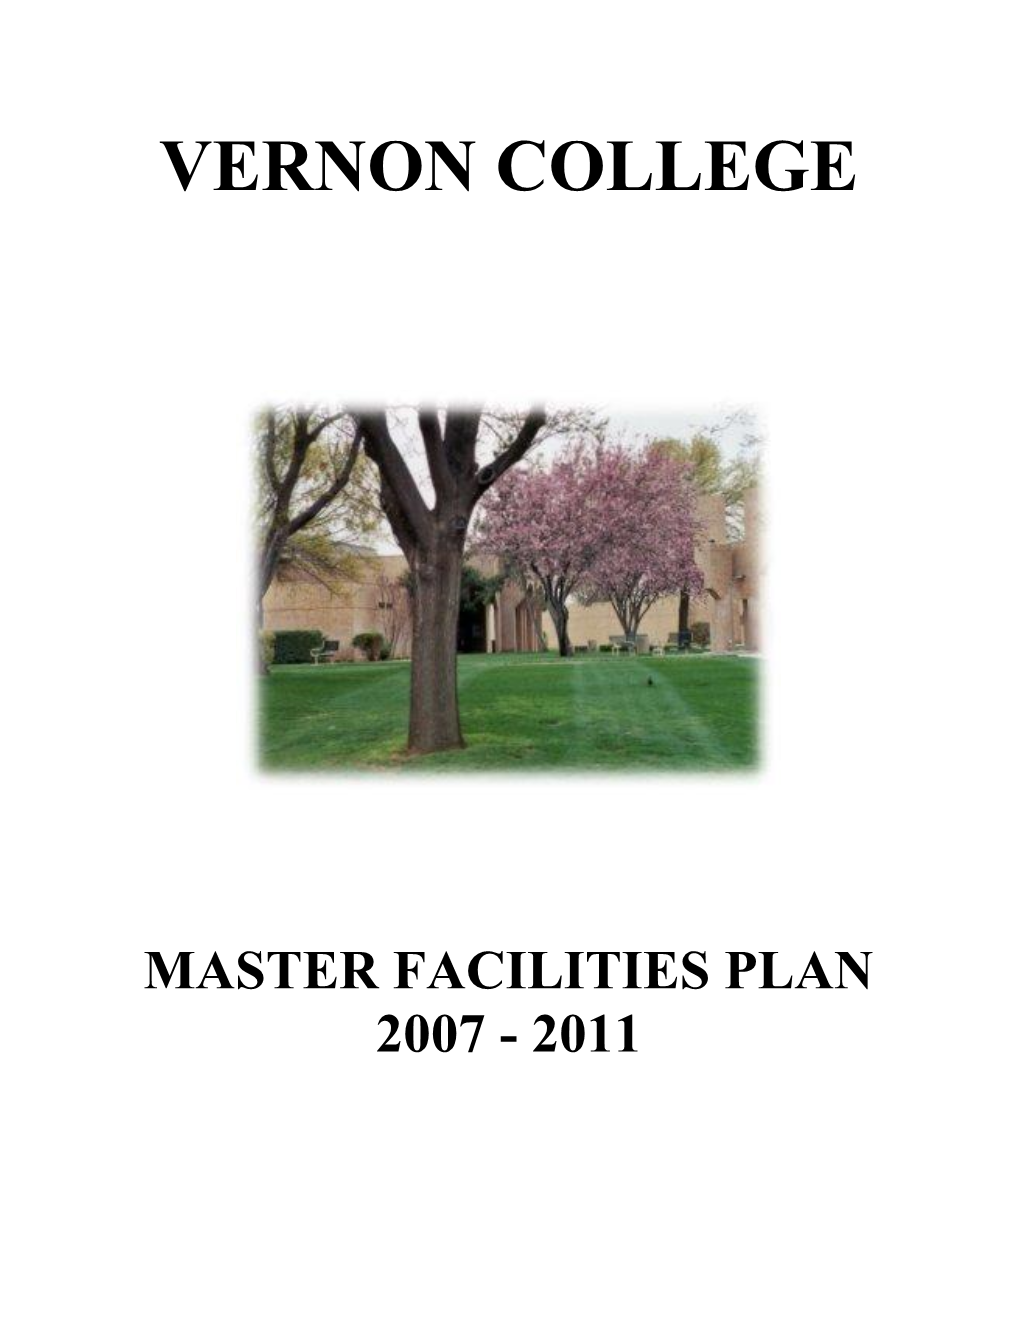 Vernon College Master Facilities Plan